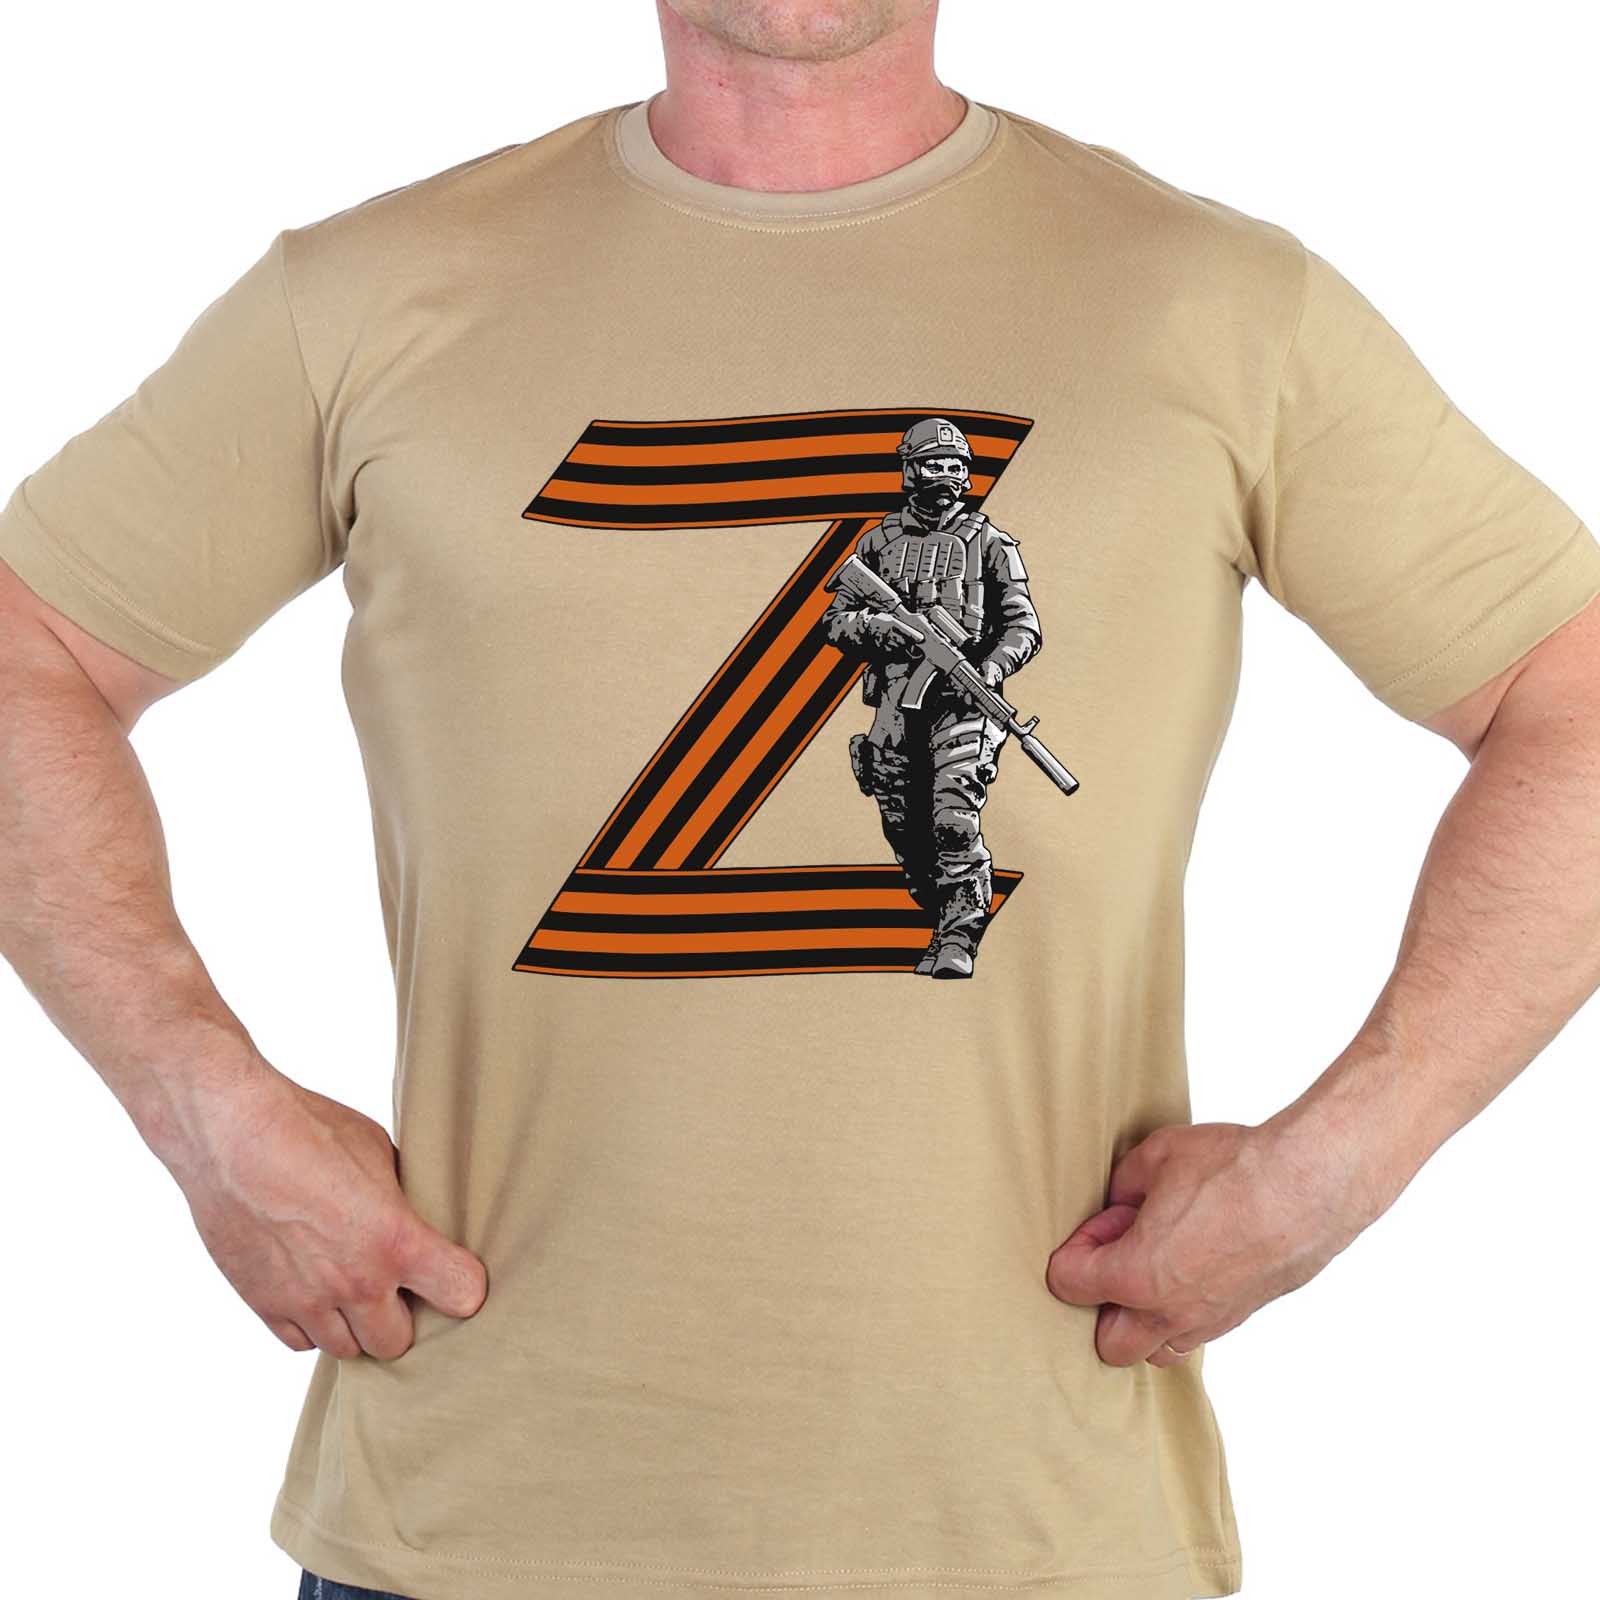 Купить футболку милитари с буквой «Z»